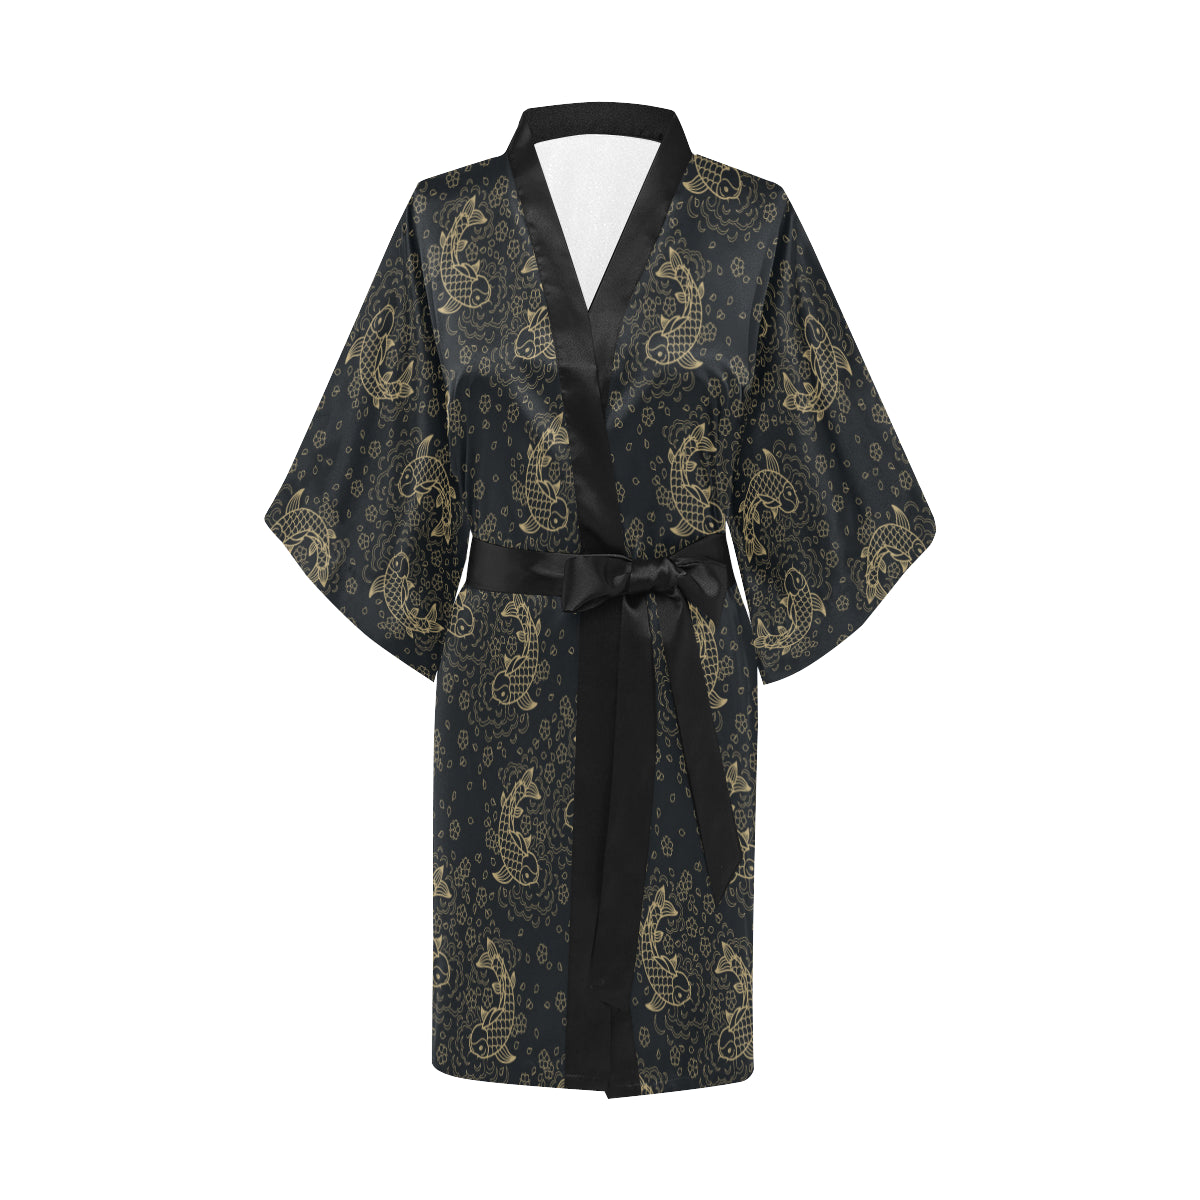 KOI Fish Pattern Print Design 02 Women's Short Kimono